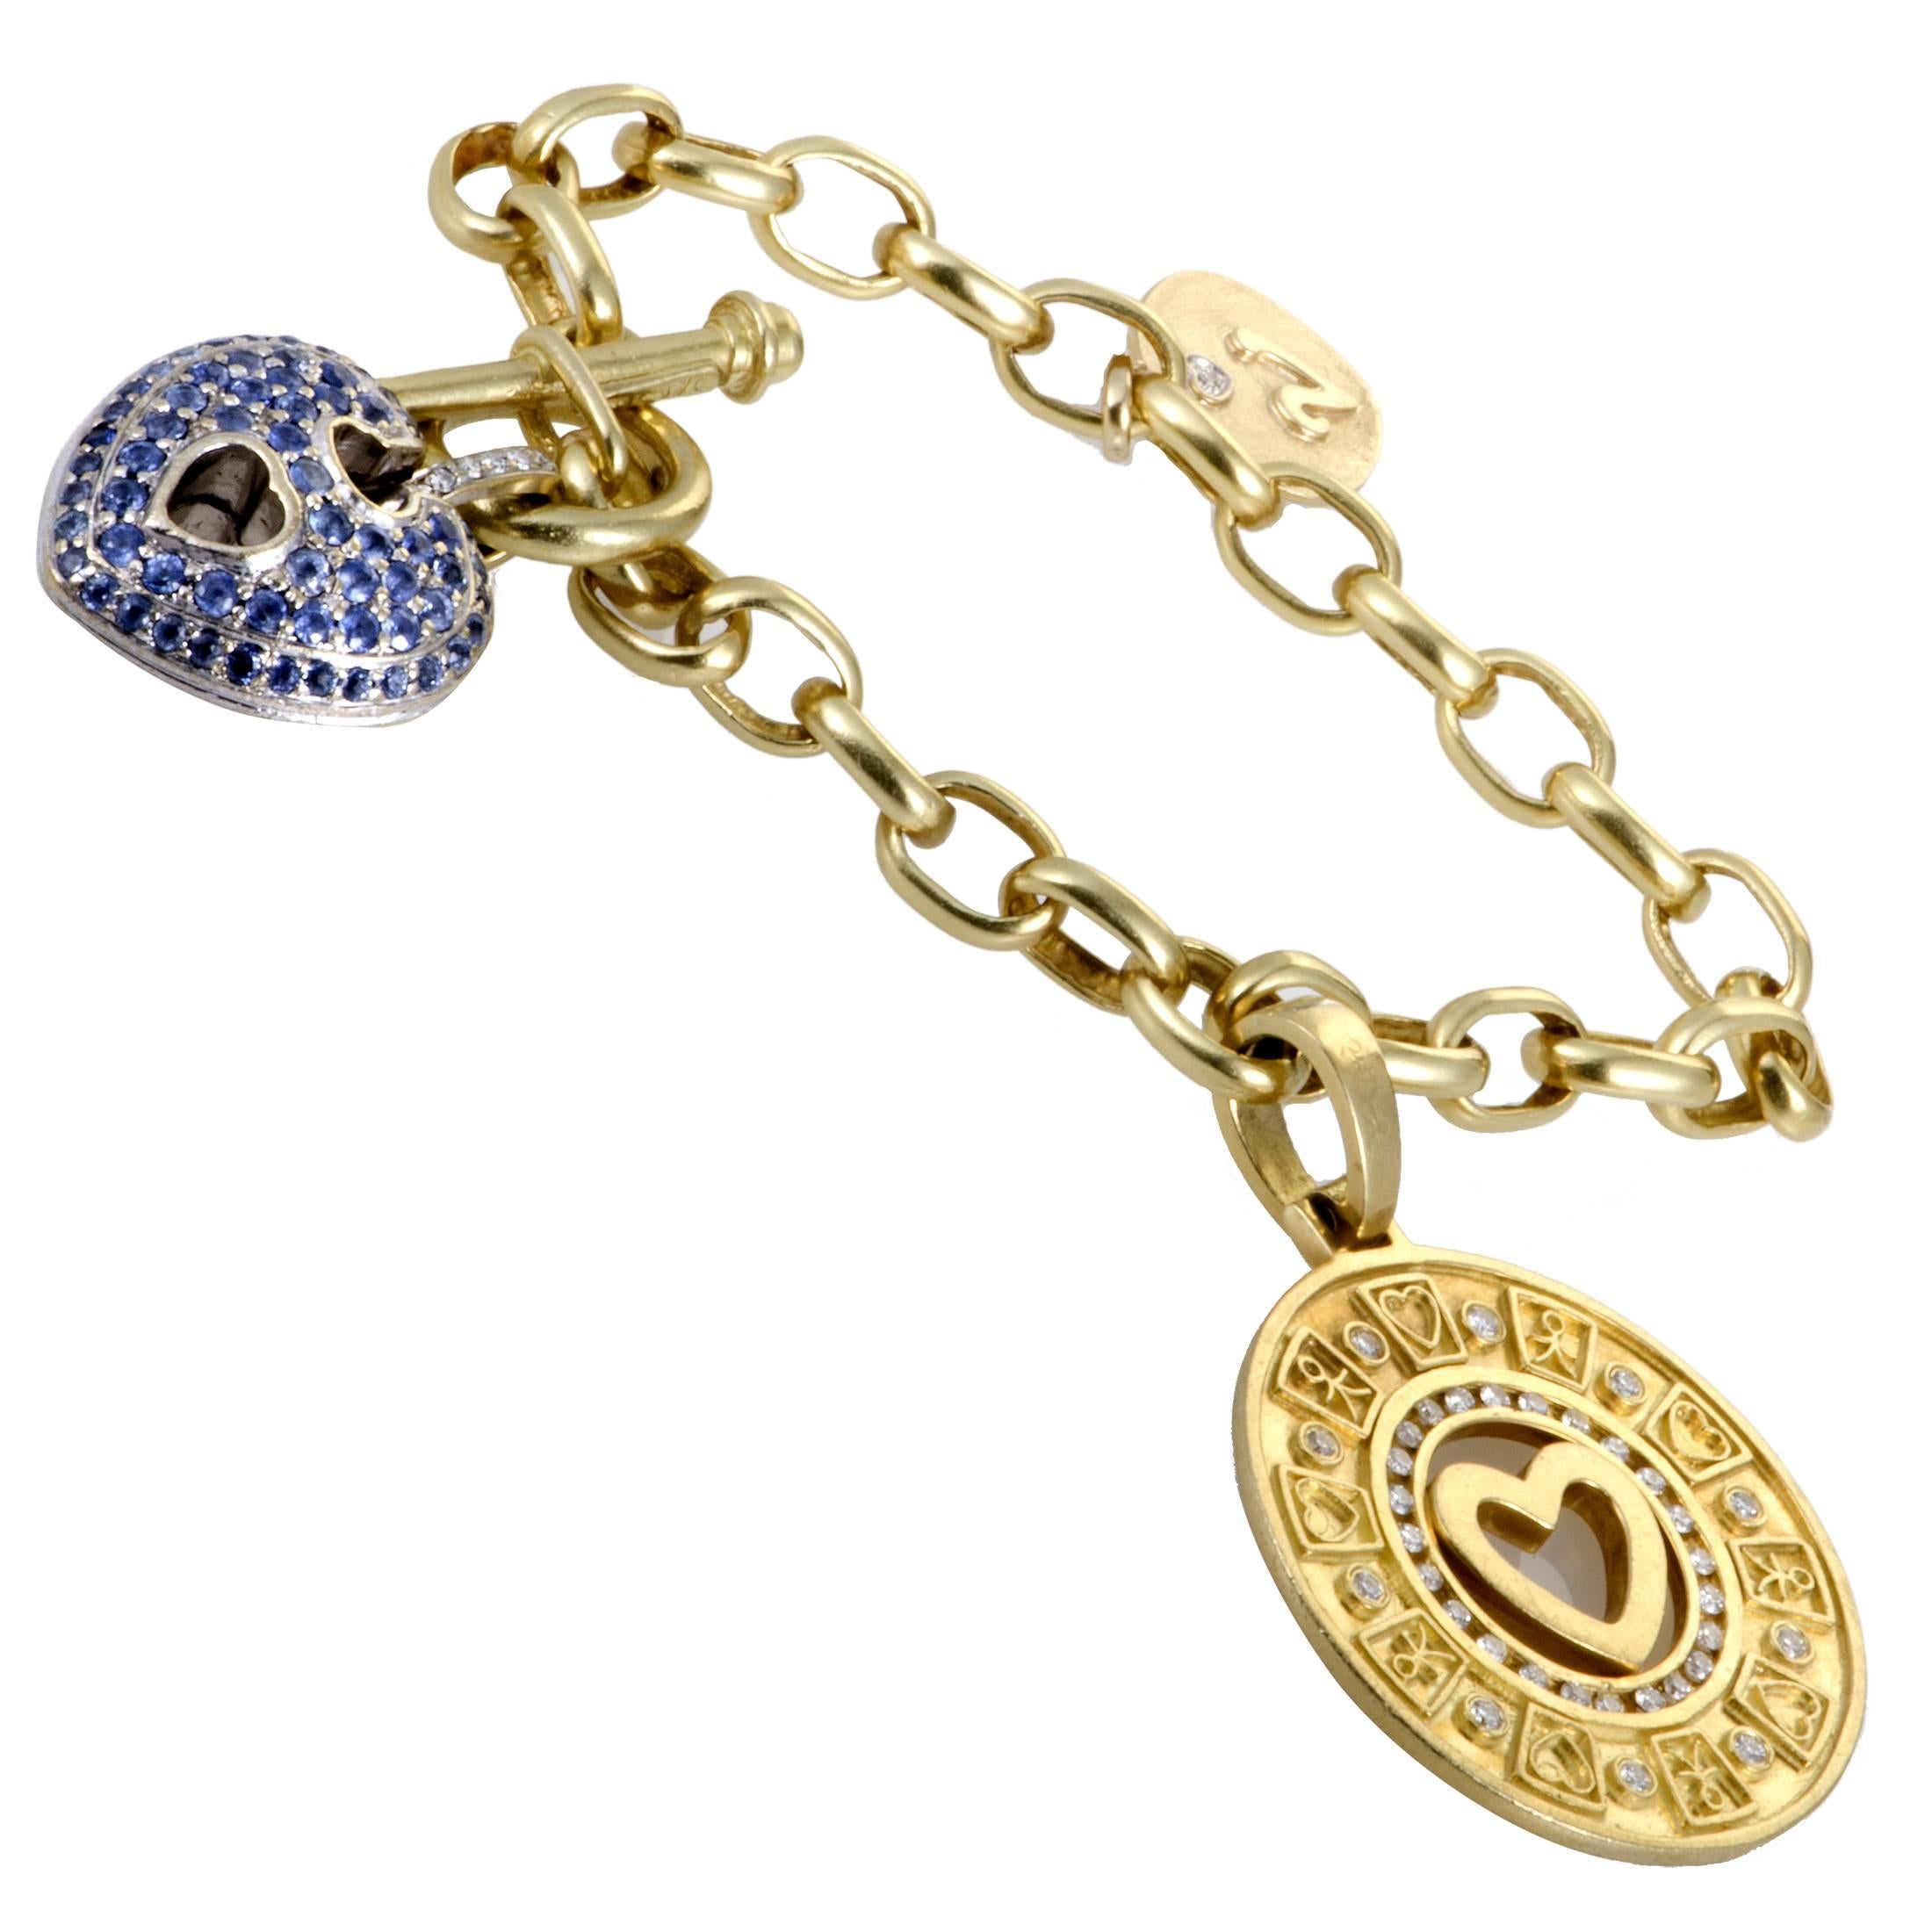 Marlene Stow Diamond and Sapphire Gold Charm Bracelet